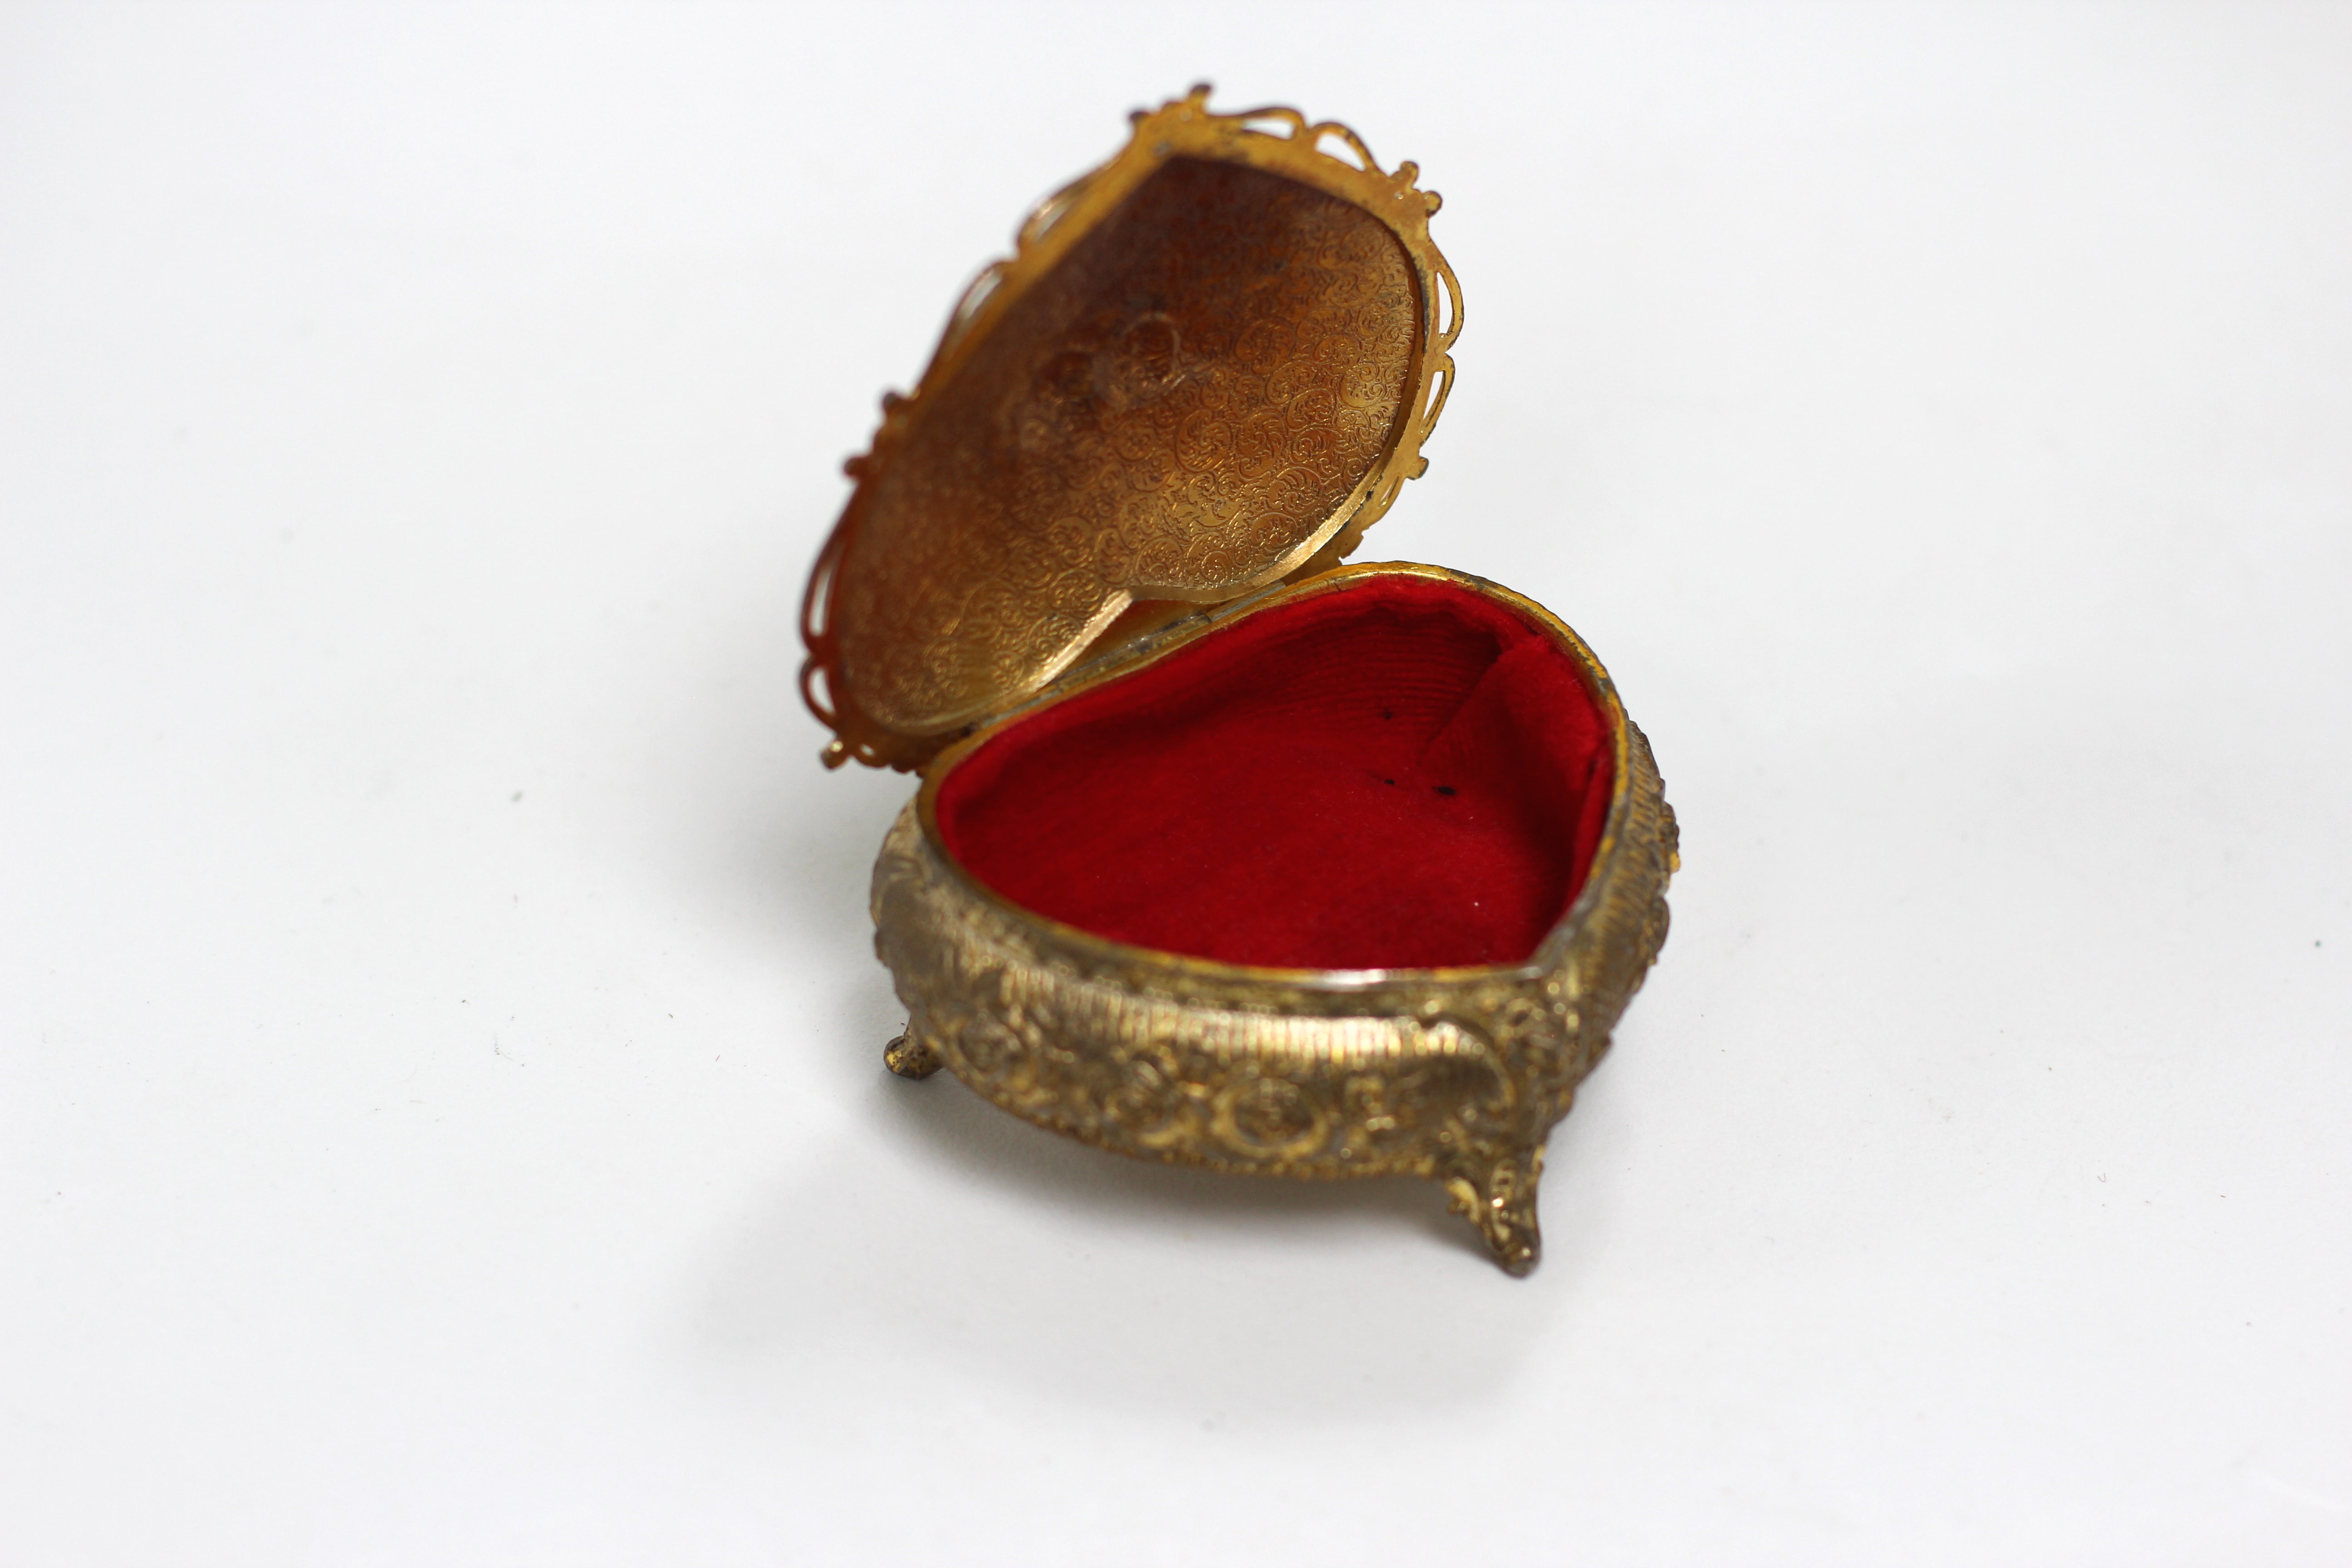 Vintage Jewelry Box Antique White Cream Gold Jewelry Case Red -  Canada